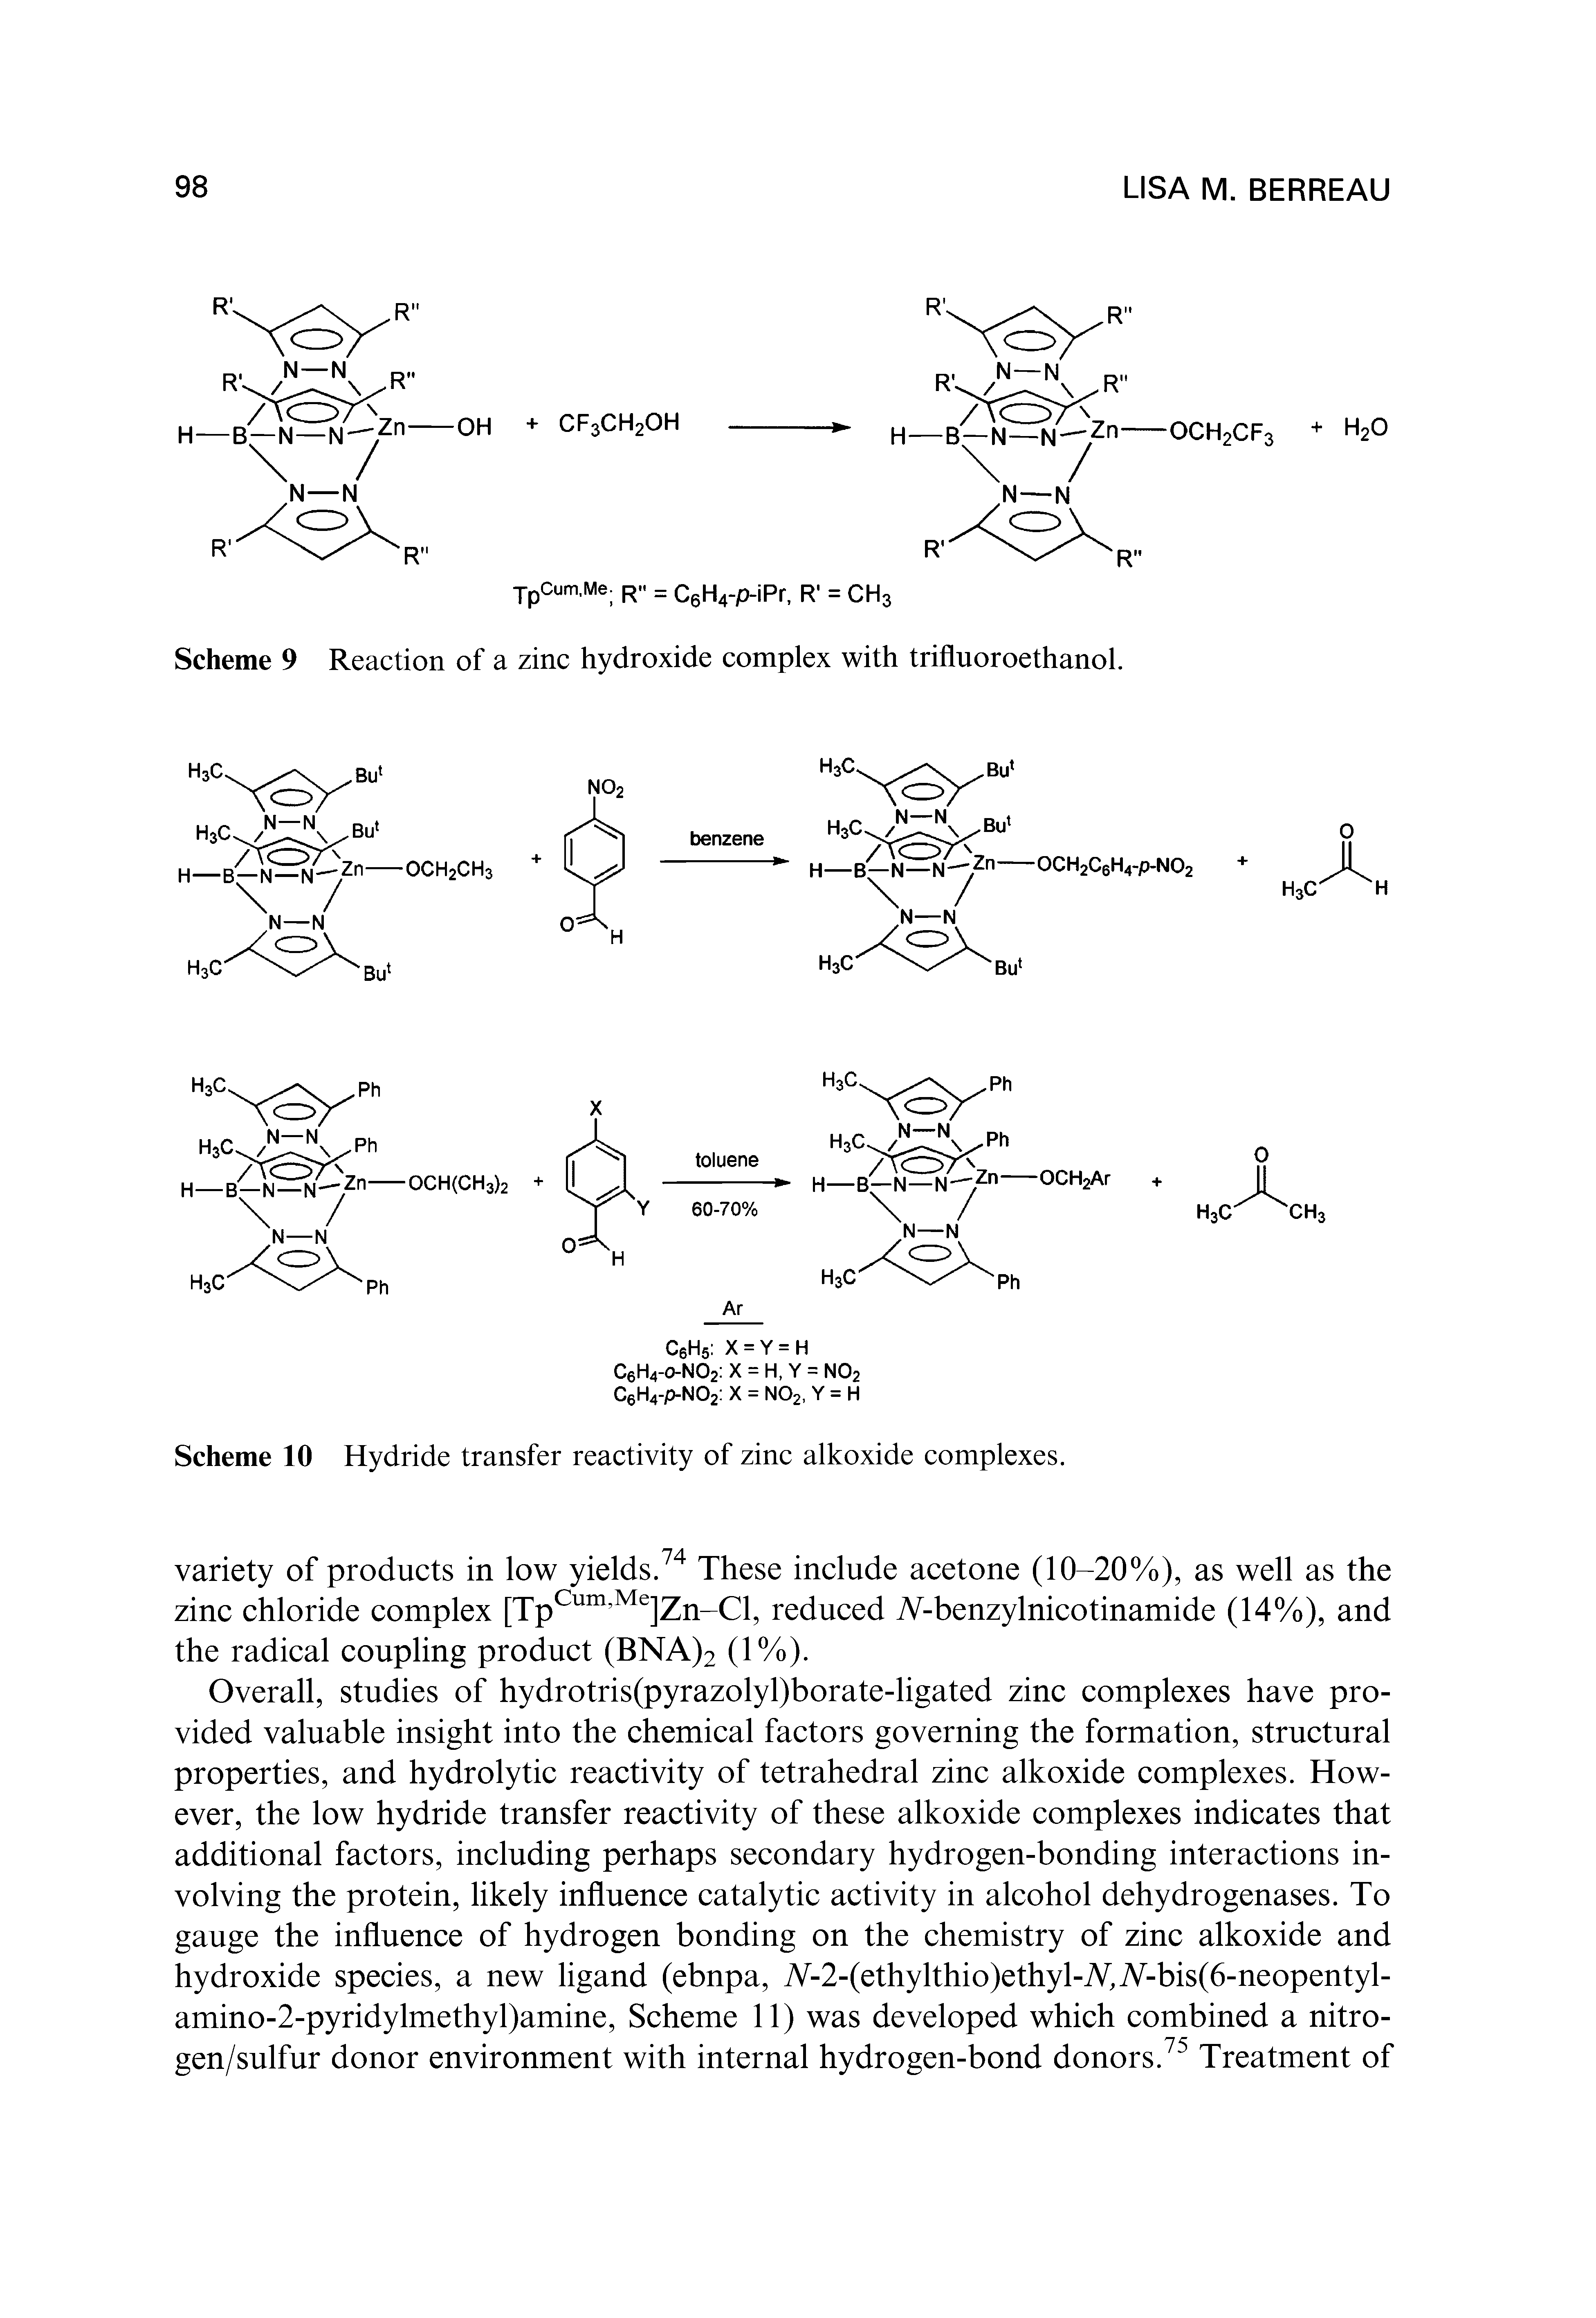 Scheme 10 Hydride transfer reactivity of zinc alkoxide complexes.